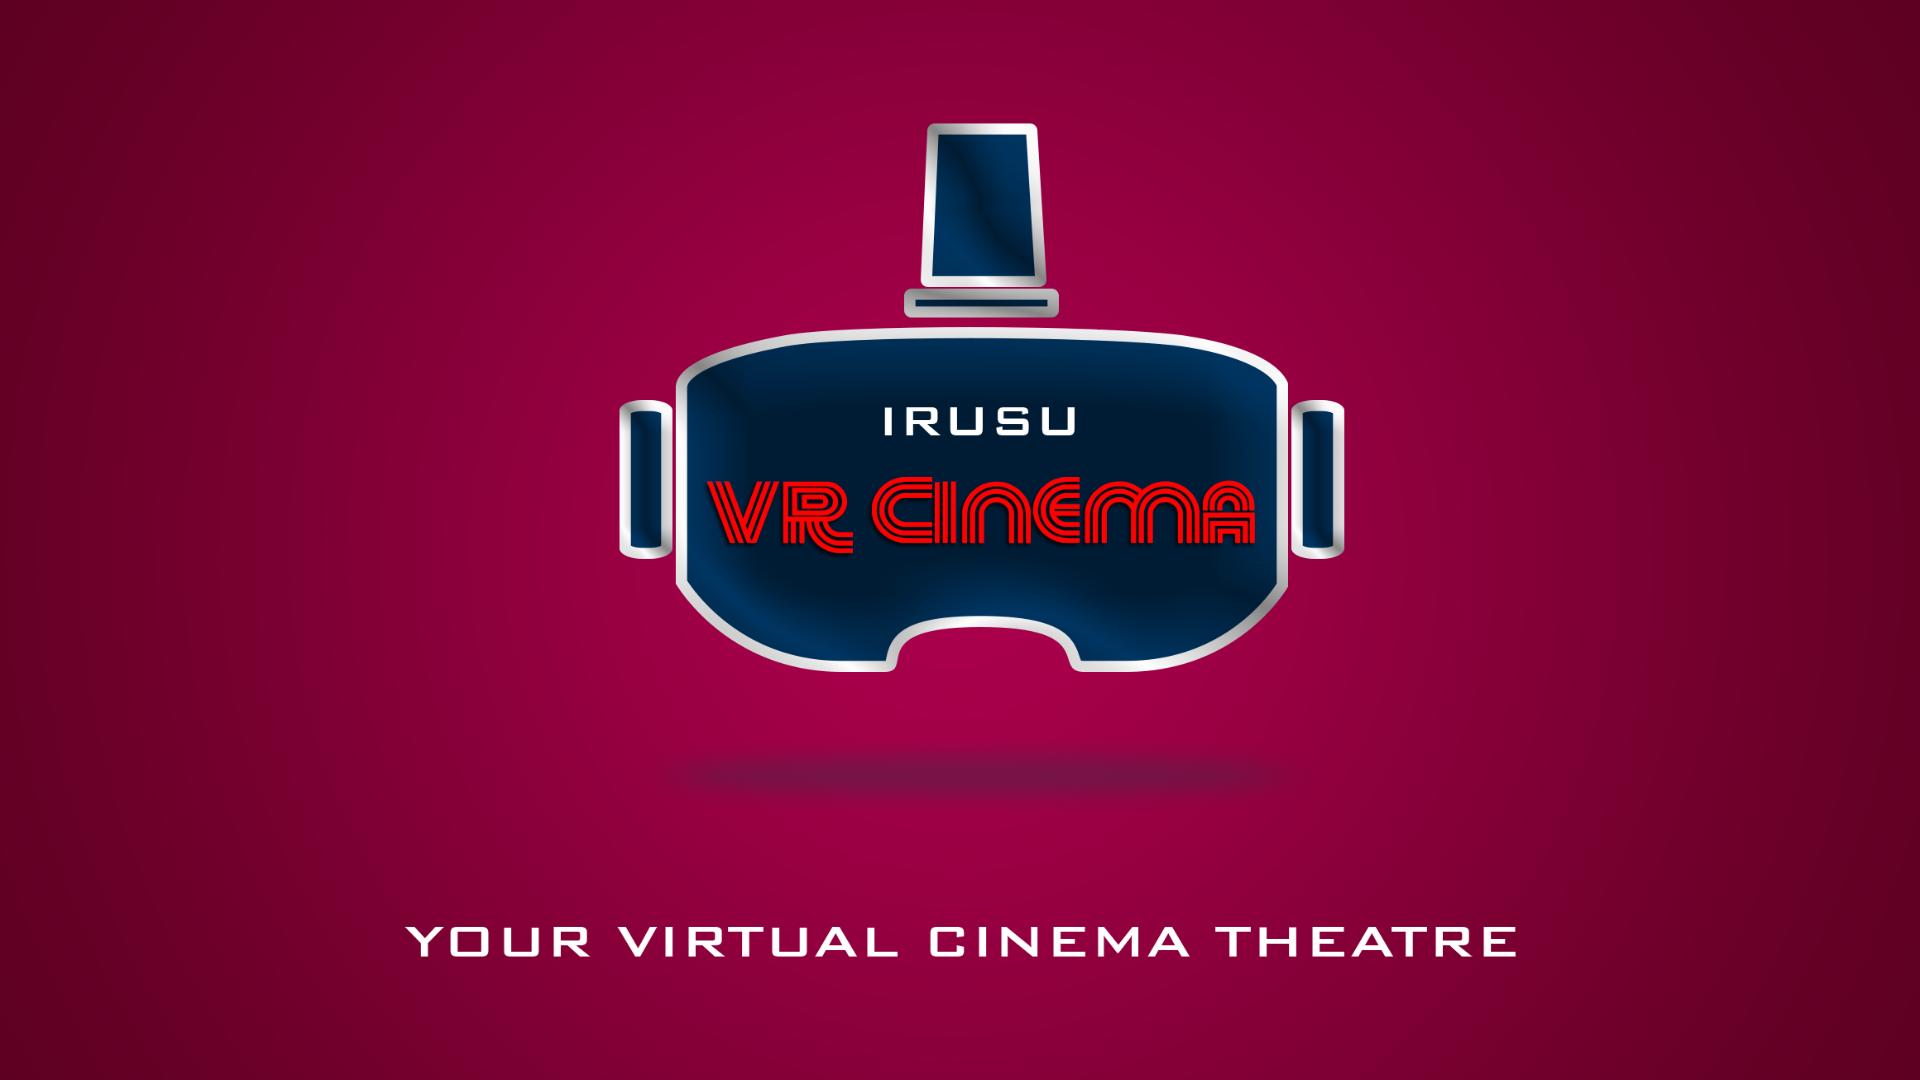 VR Cinema Player - Irusu